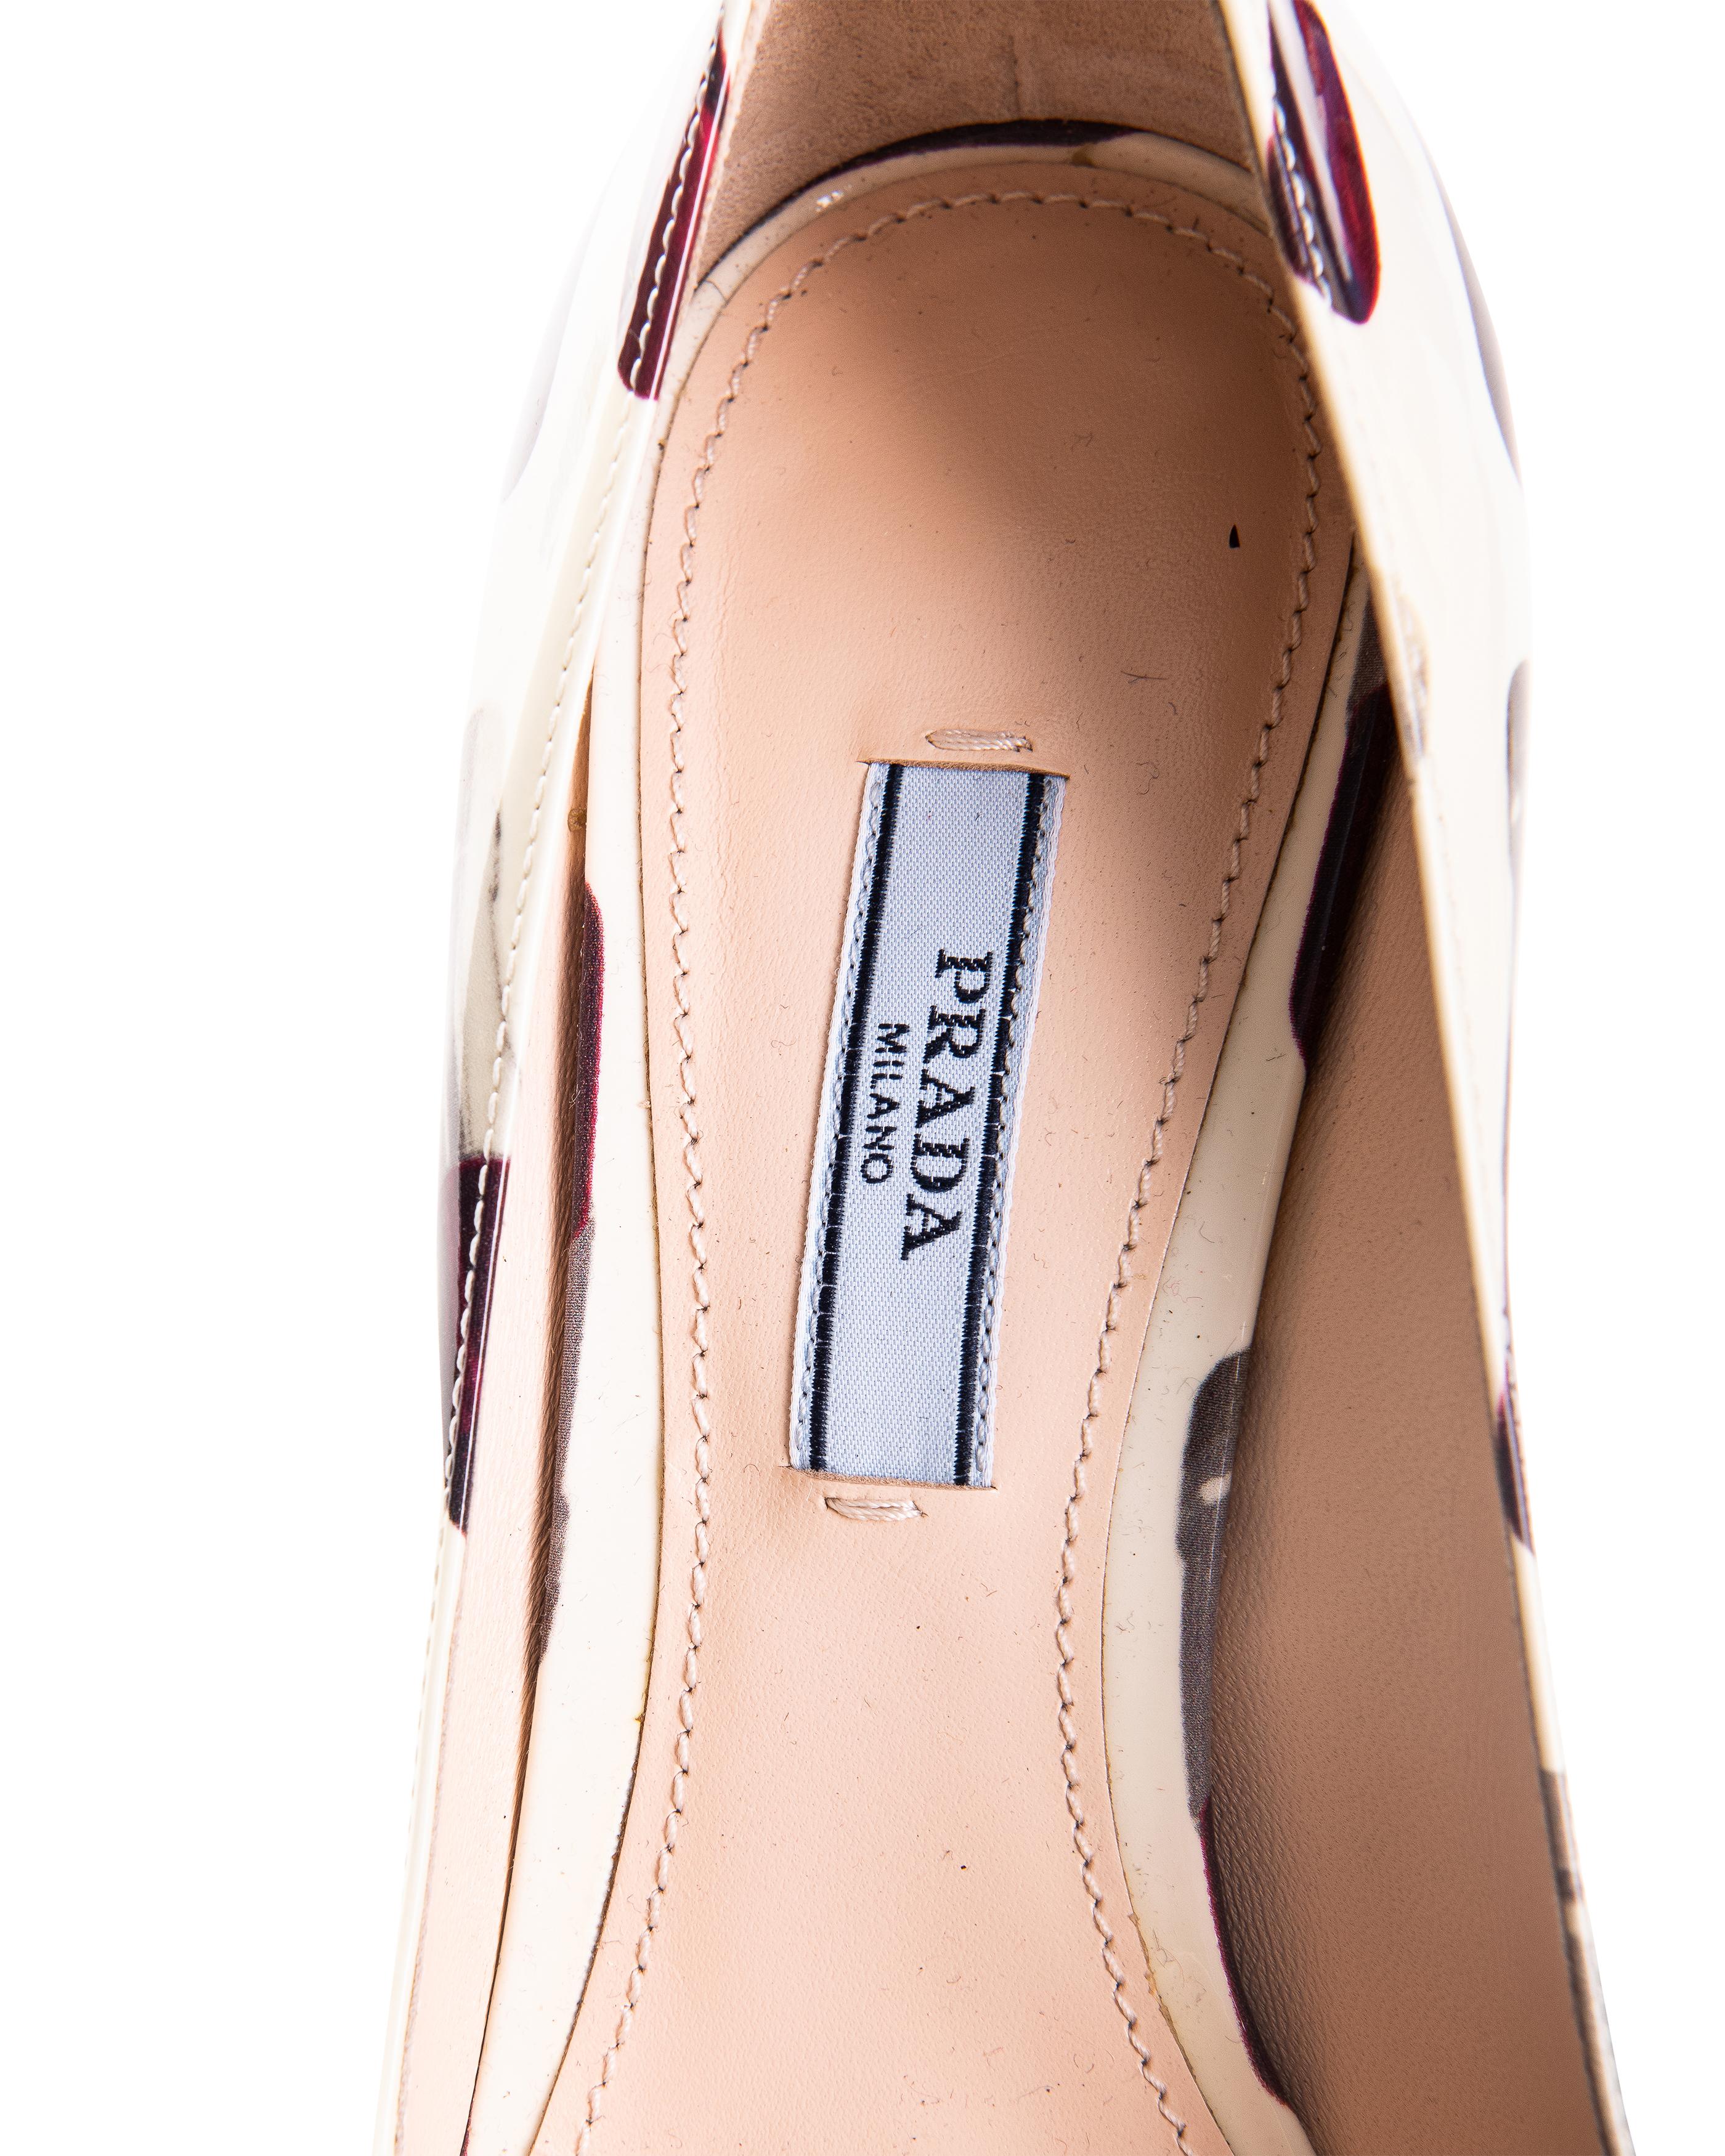 S/S 2000 Prada by Miuccia Prada Lipstick Heels 5